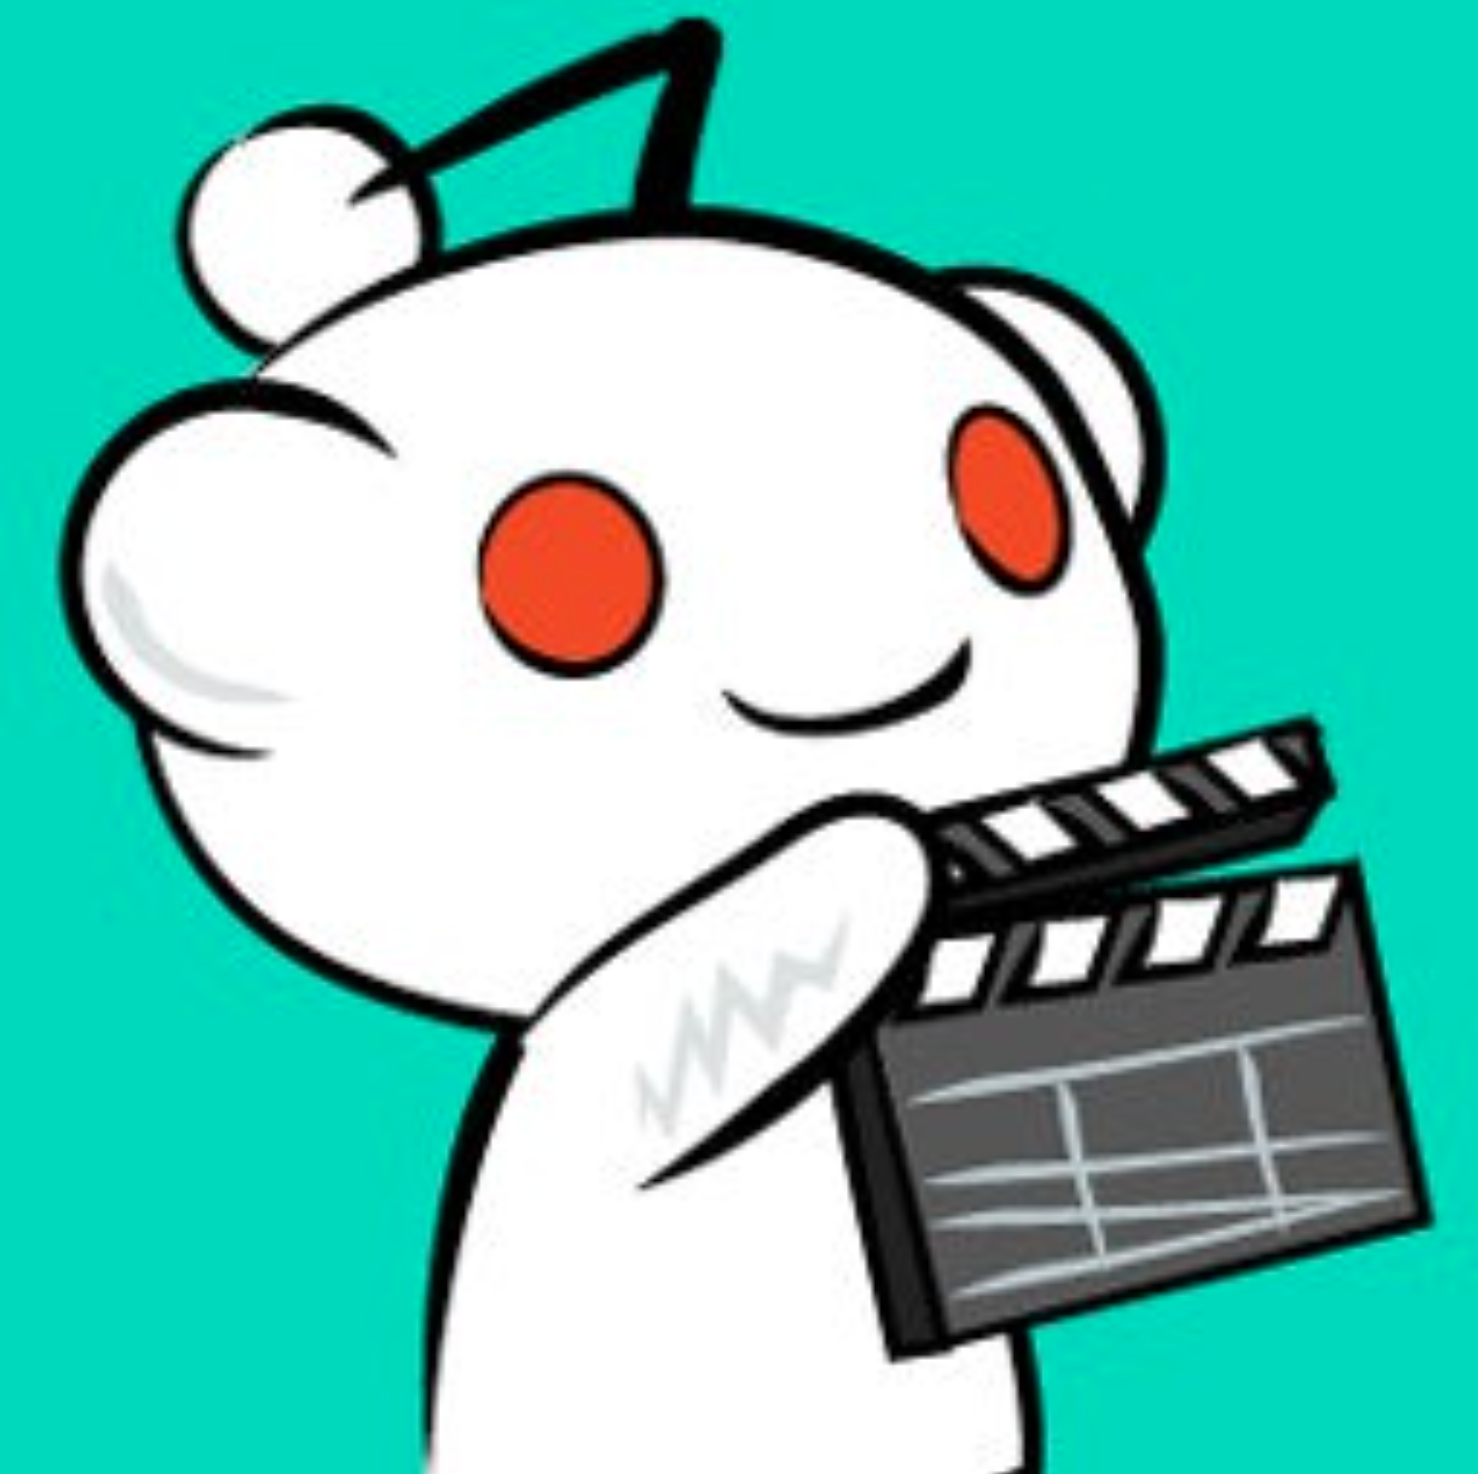 40 BEST Reddit Streaming Sites – Movies & Entertainment Subreddit List